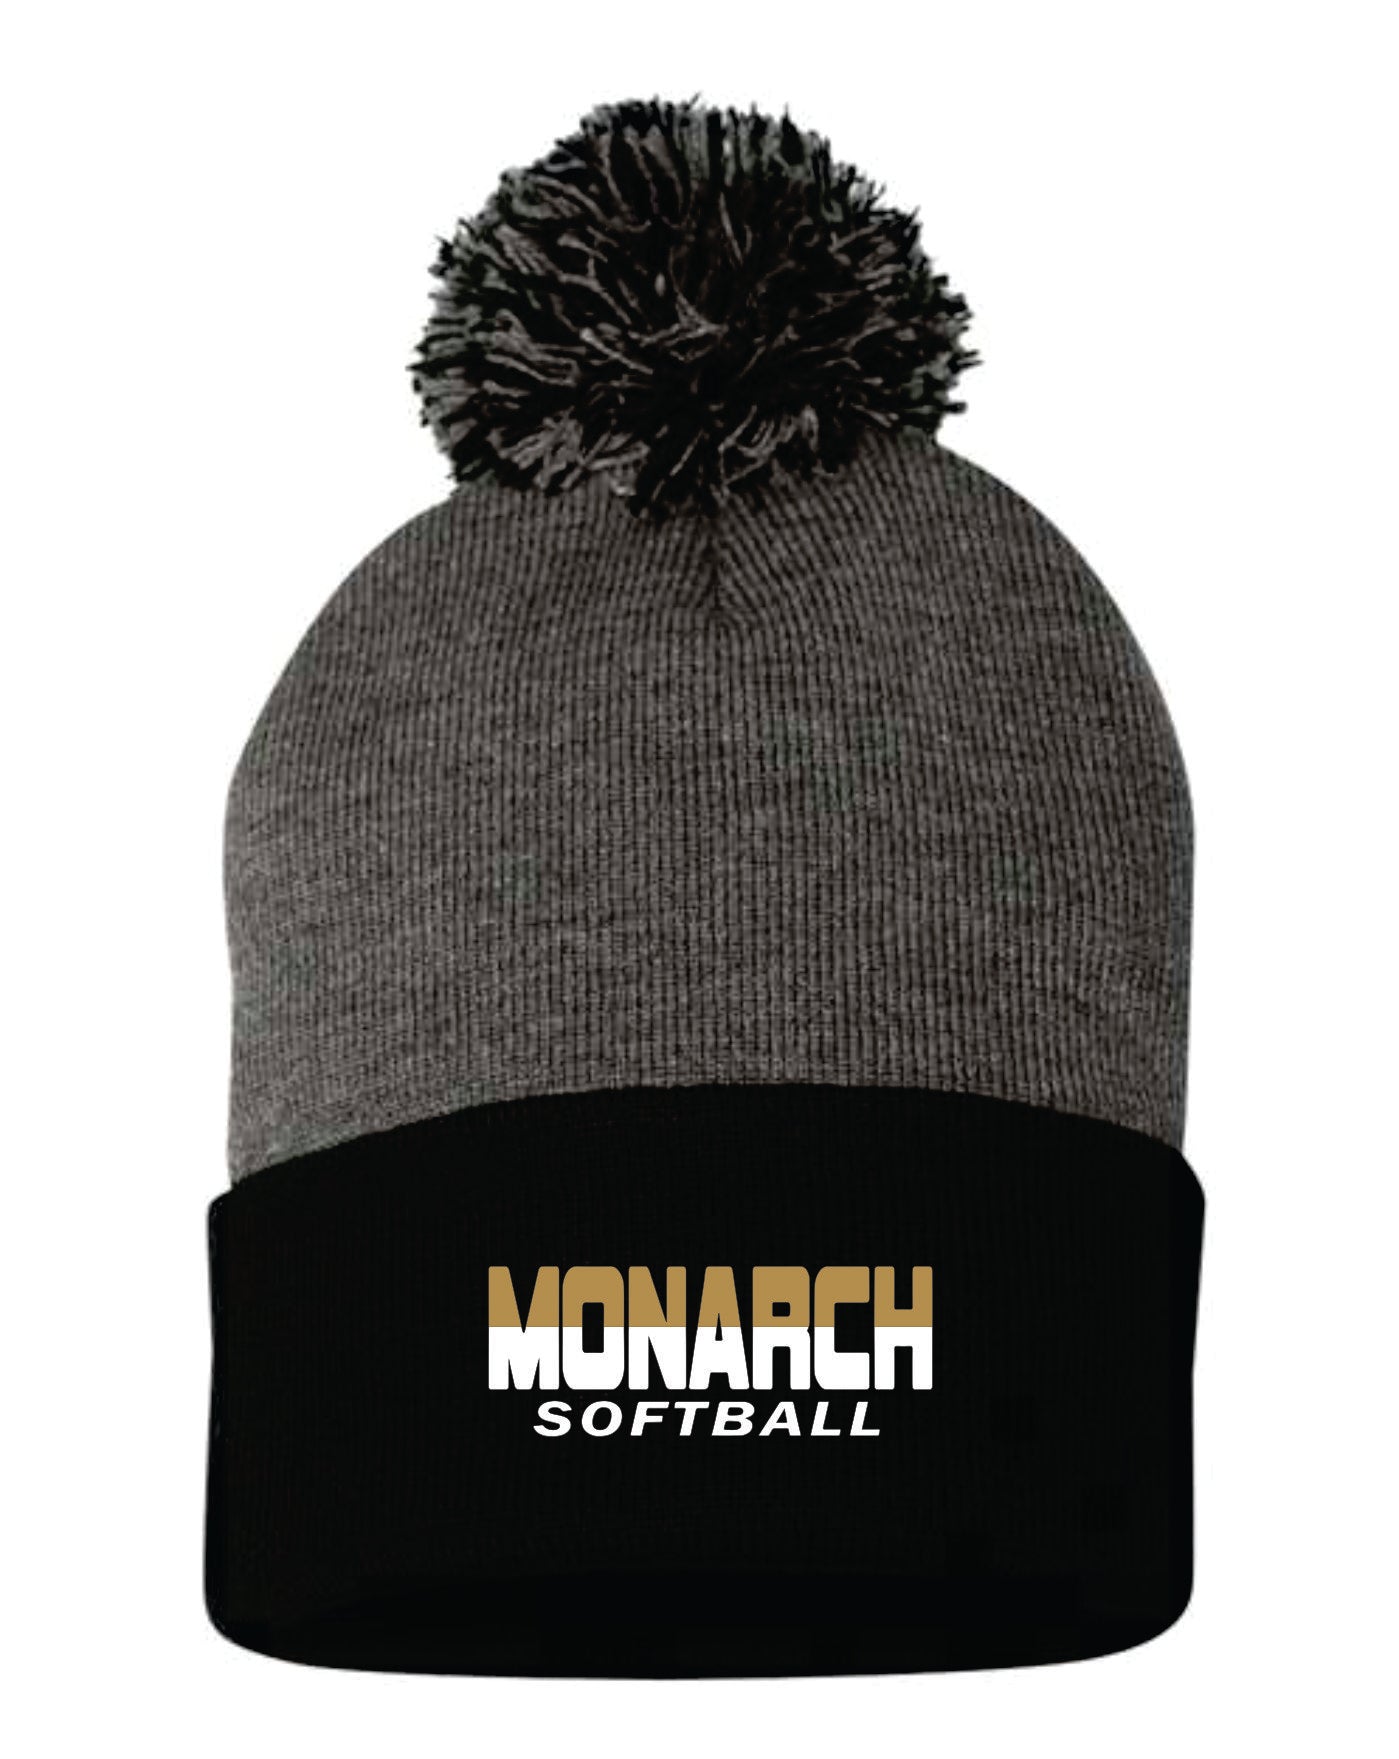 Monarch Softball Hats